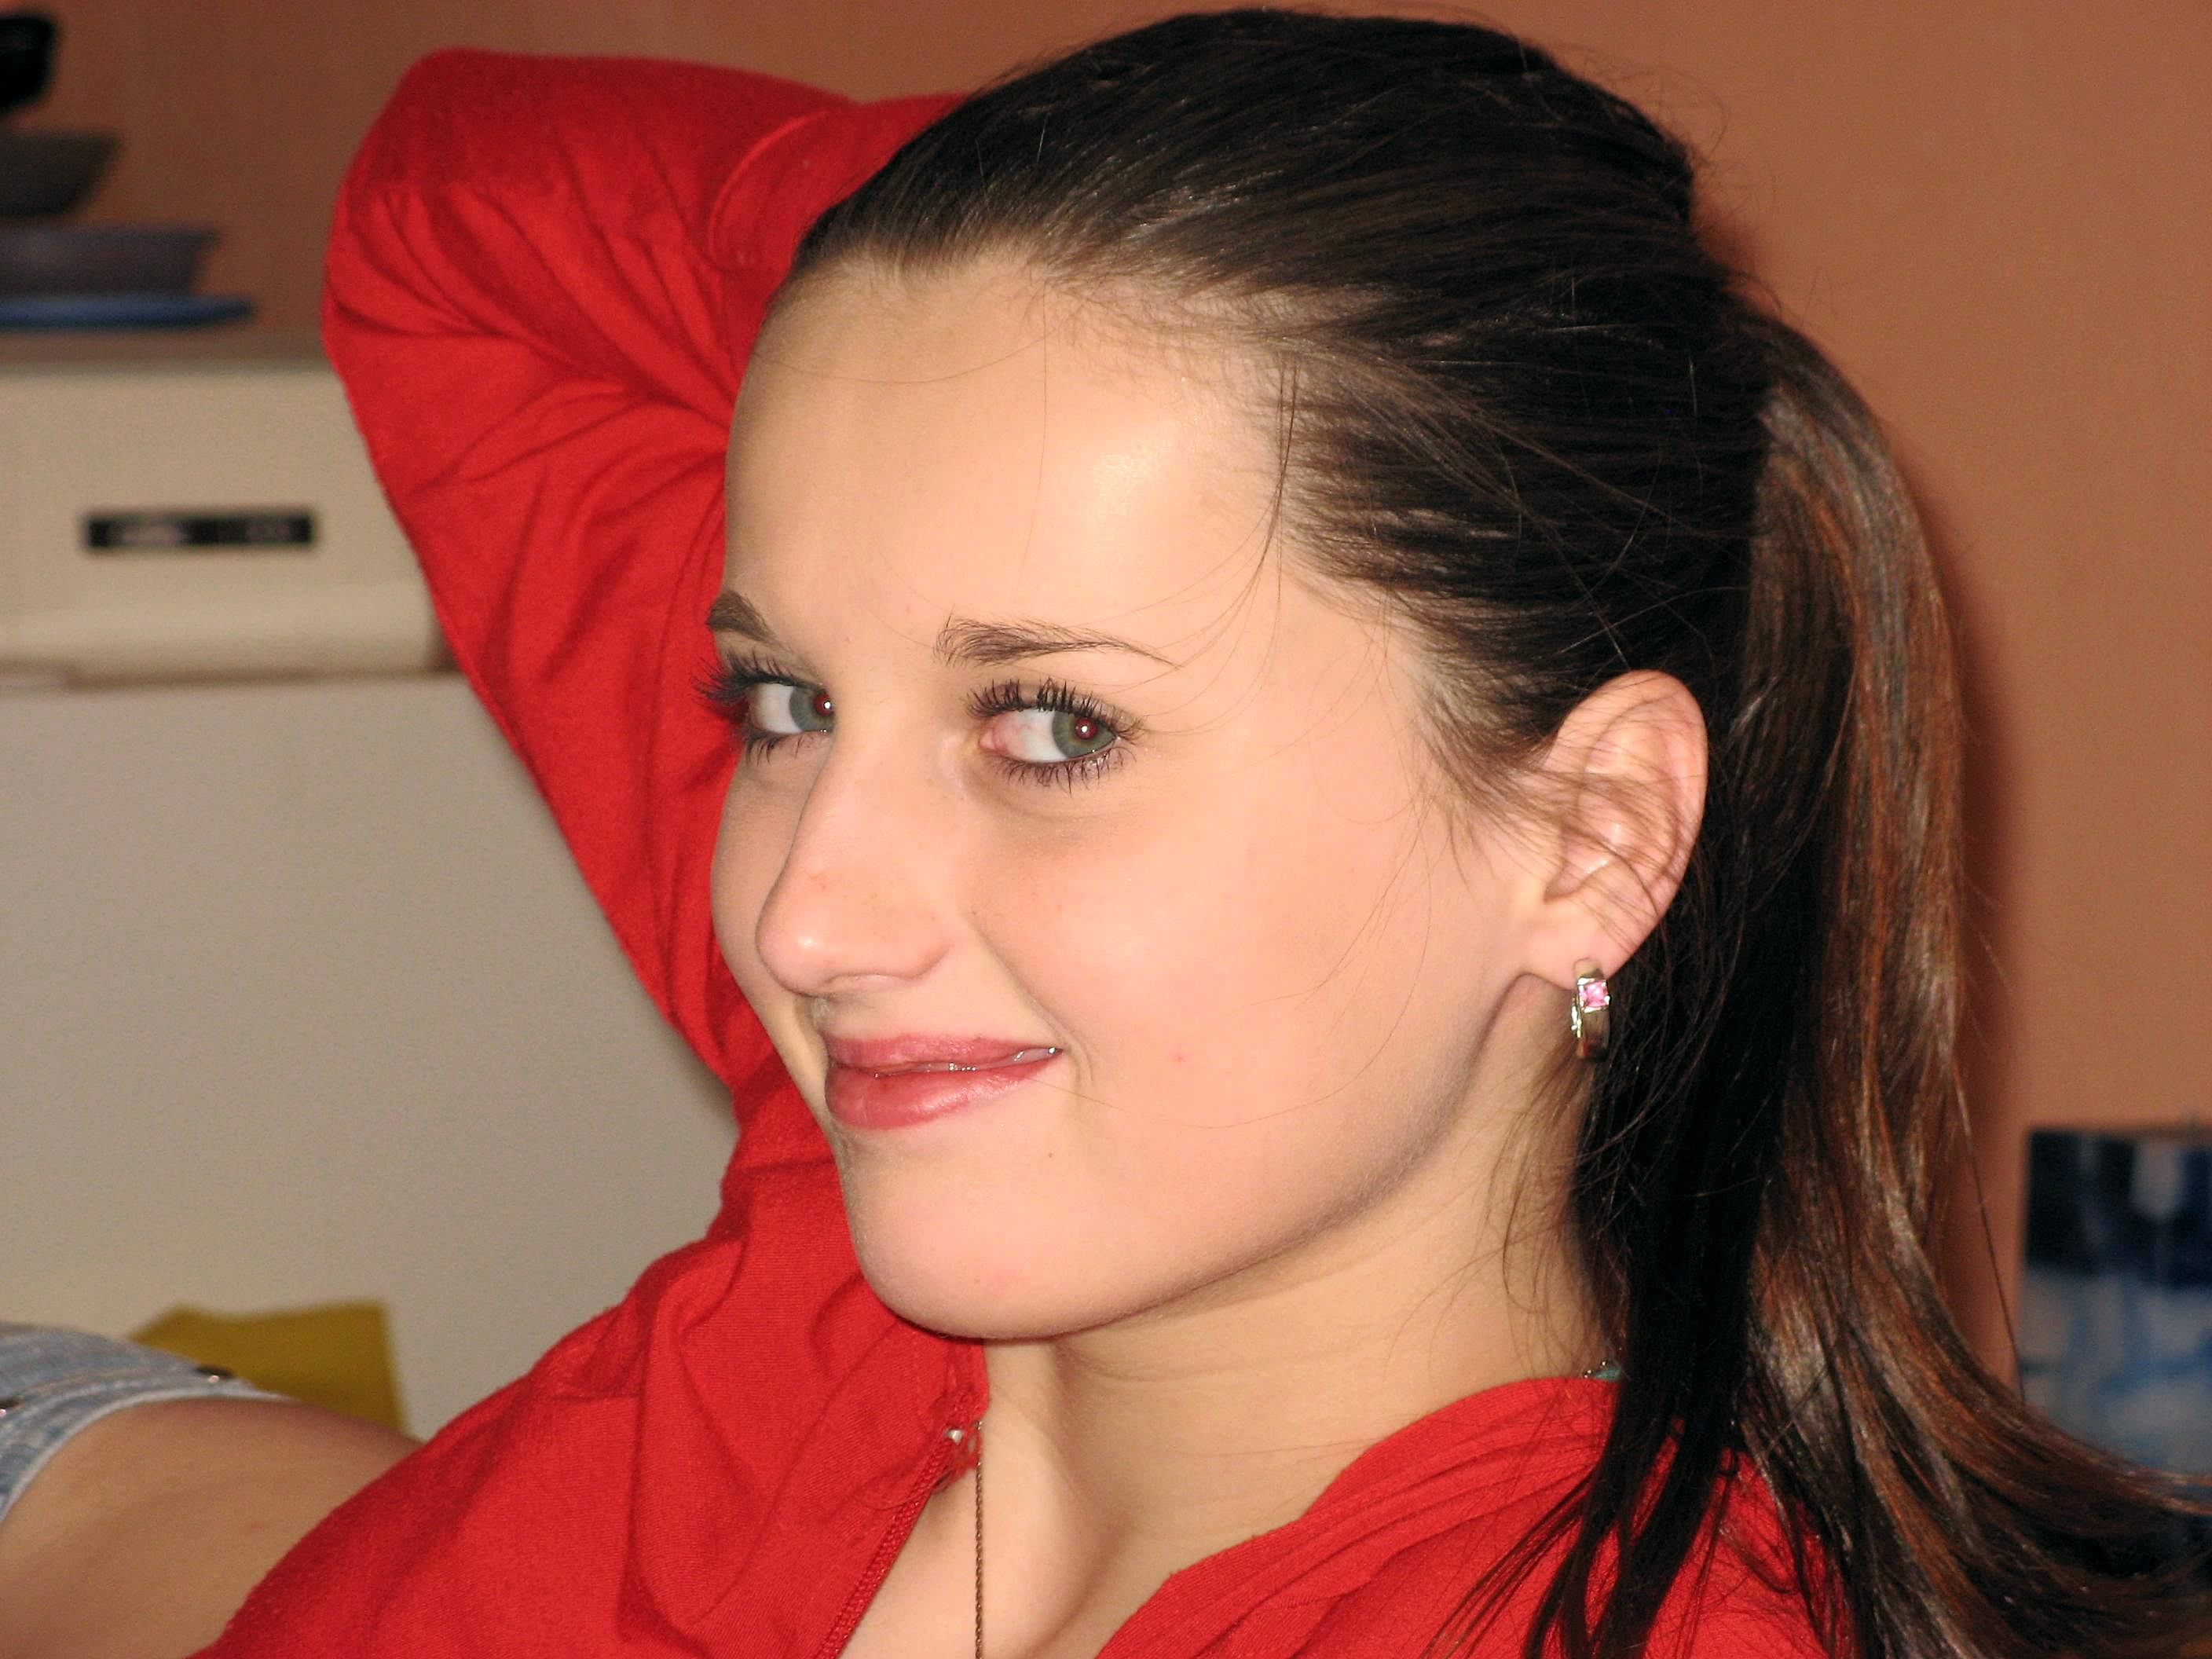 File:Beautiful girl face.jpg - Wikimedia Commons